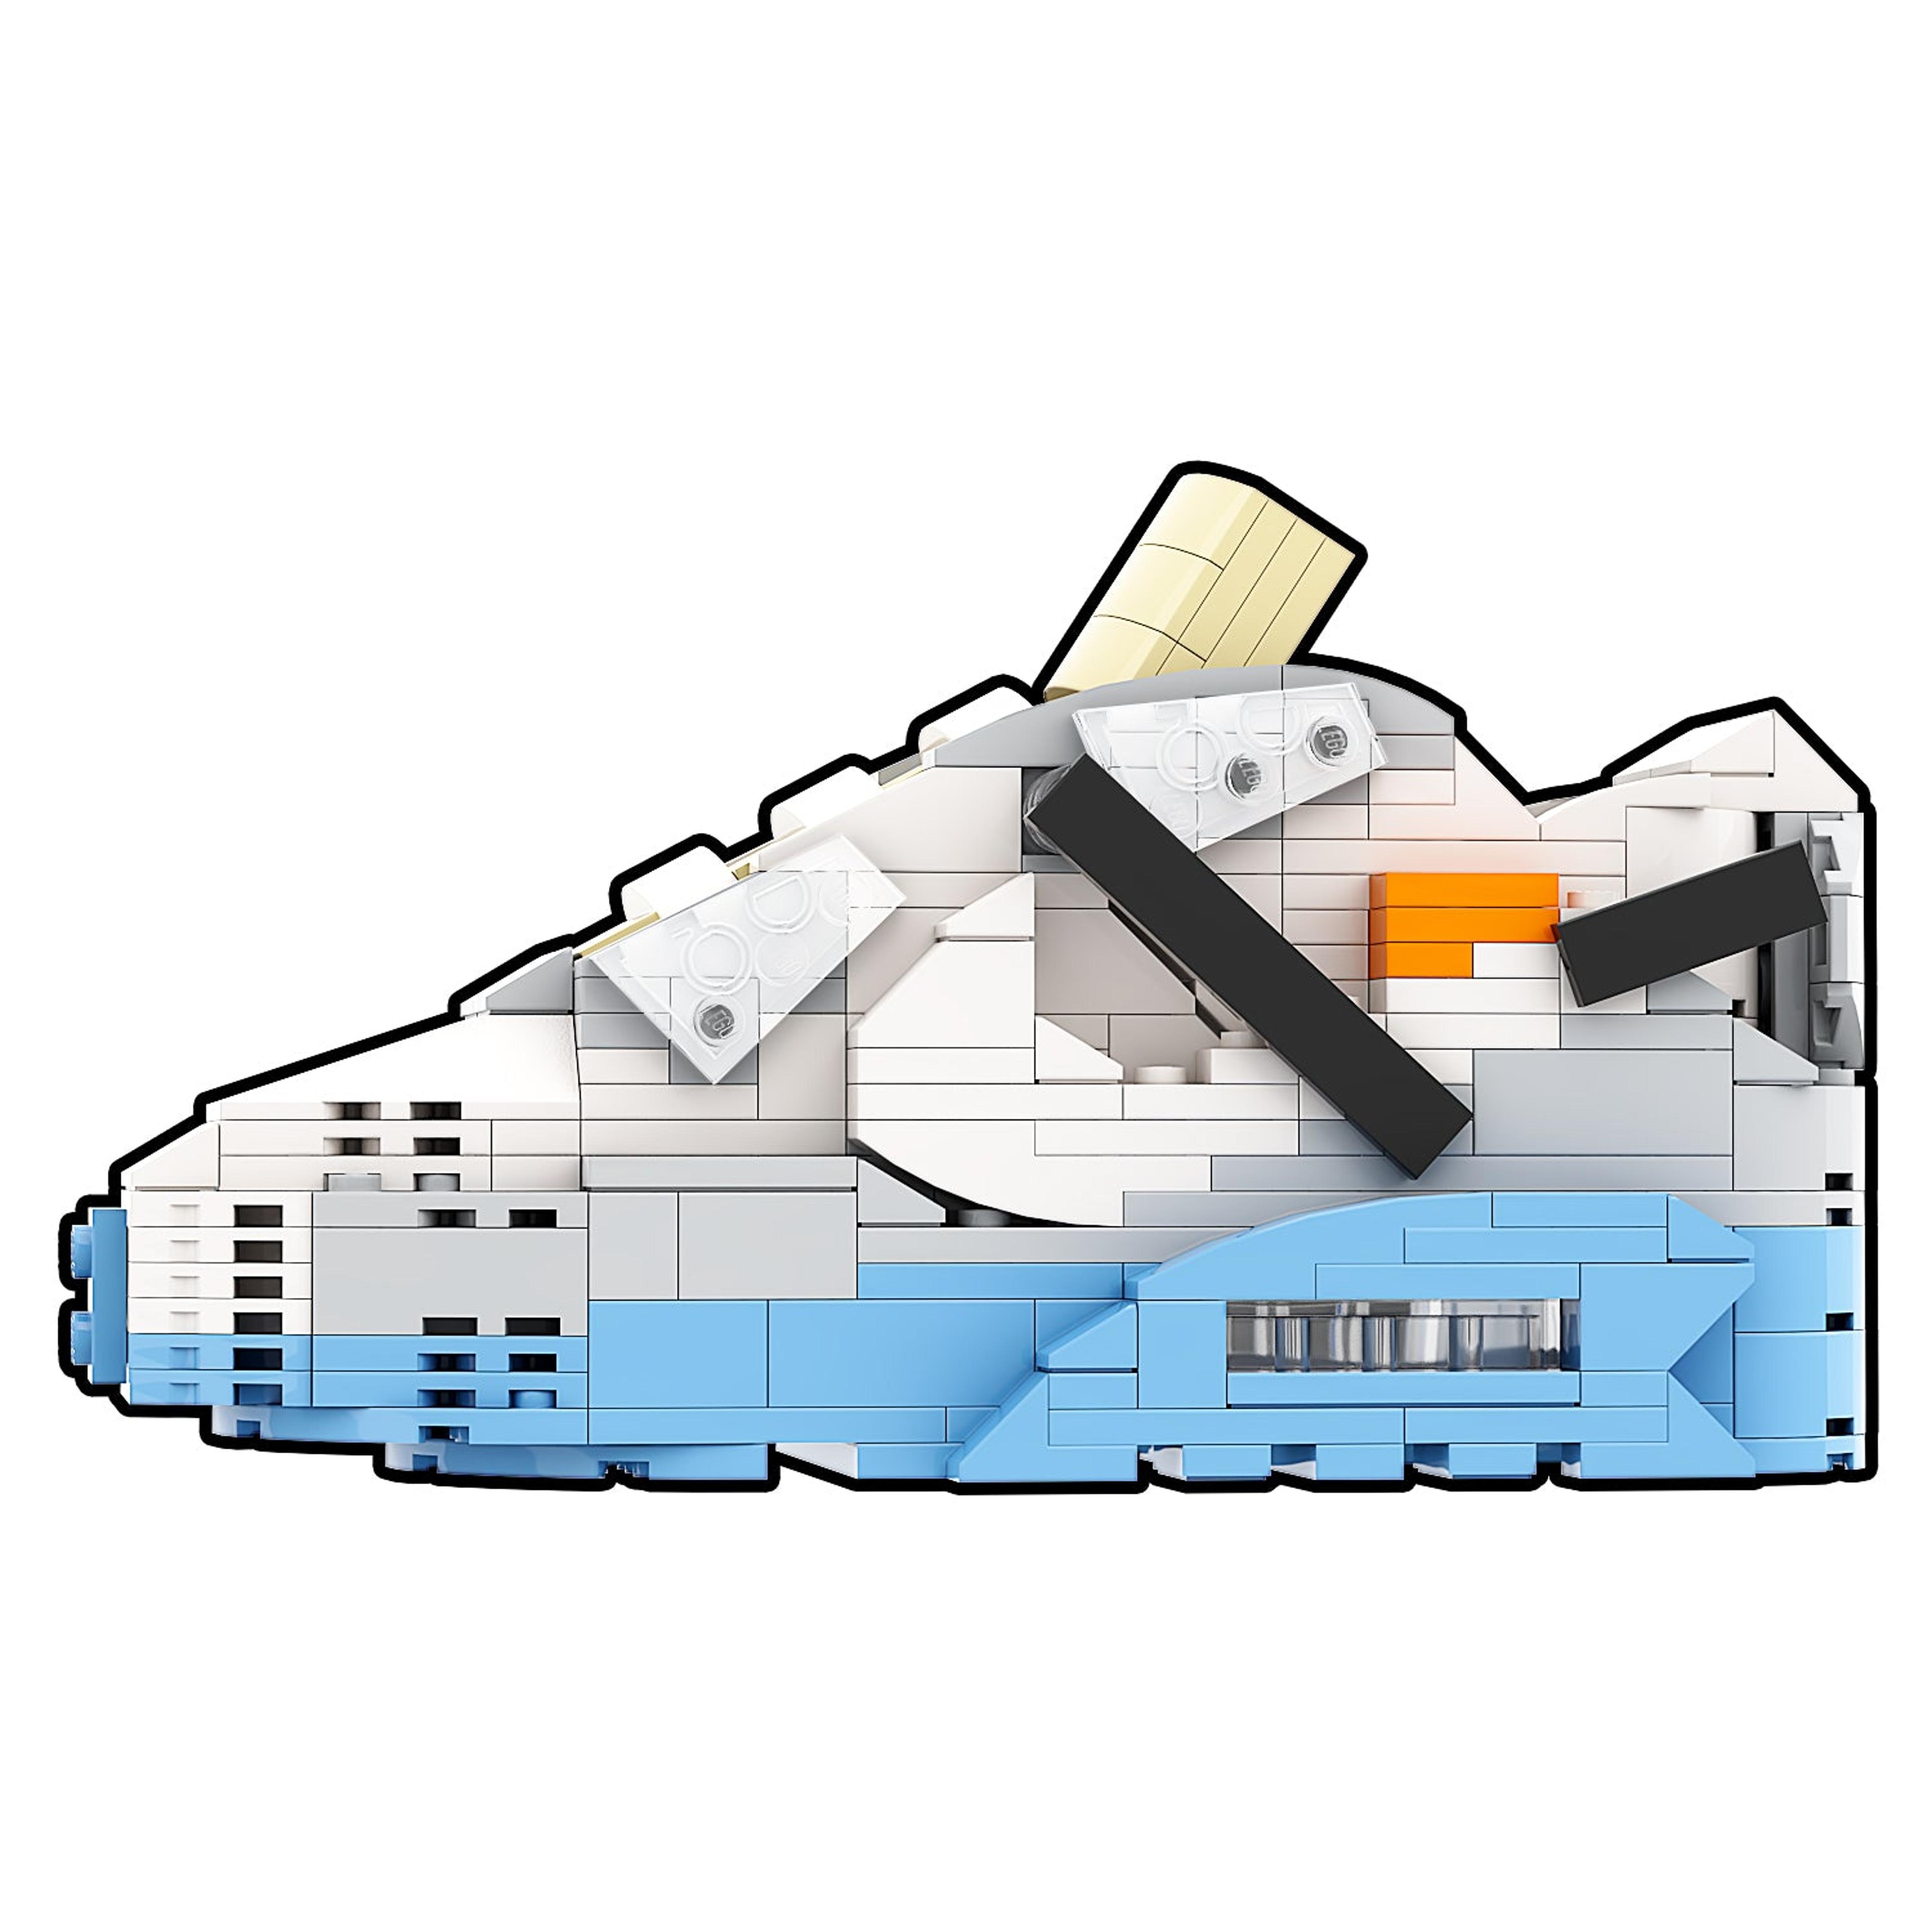 Alternate View 1 of REGULAR Air Max 90 "Off-White White" Sneaker Bricks with Mini Fi